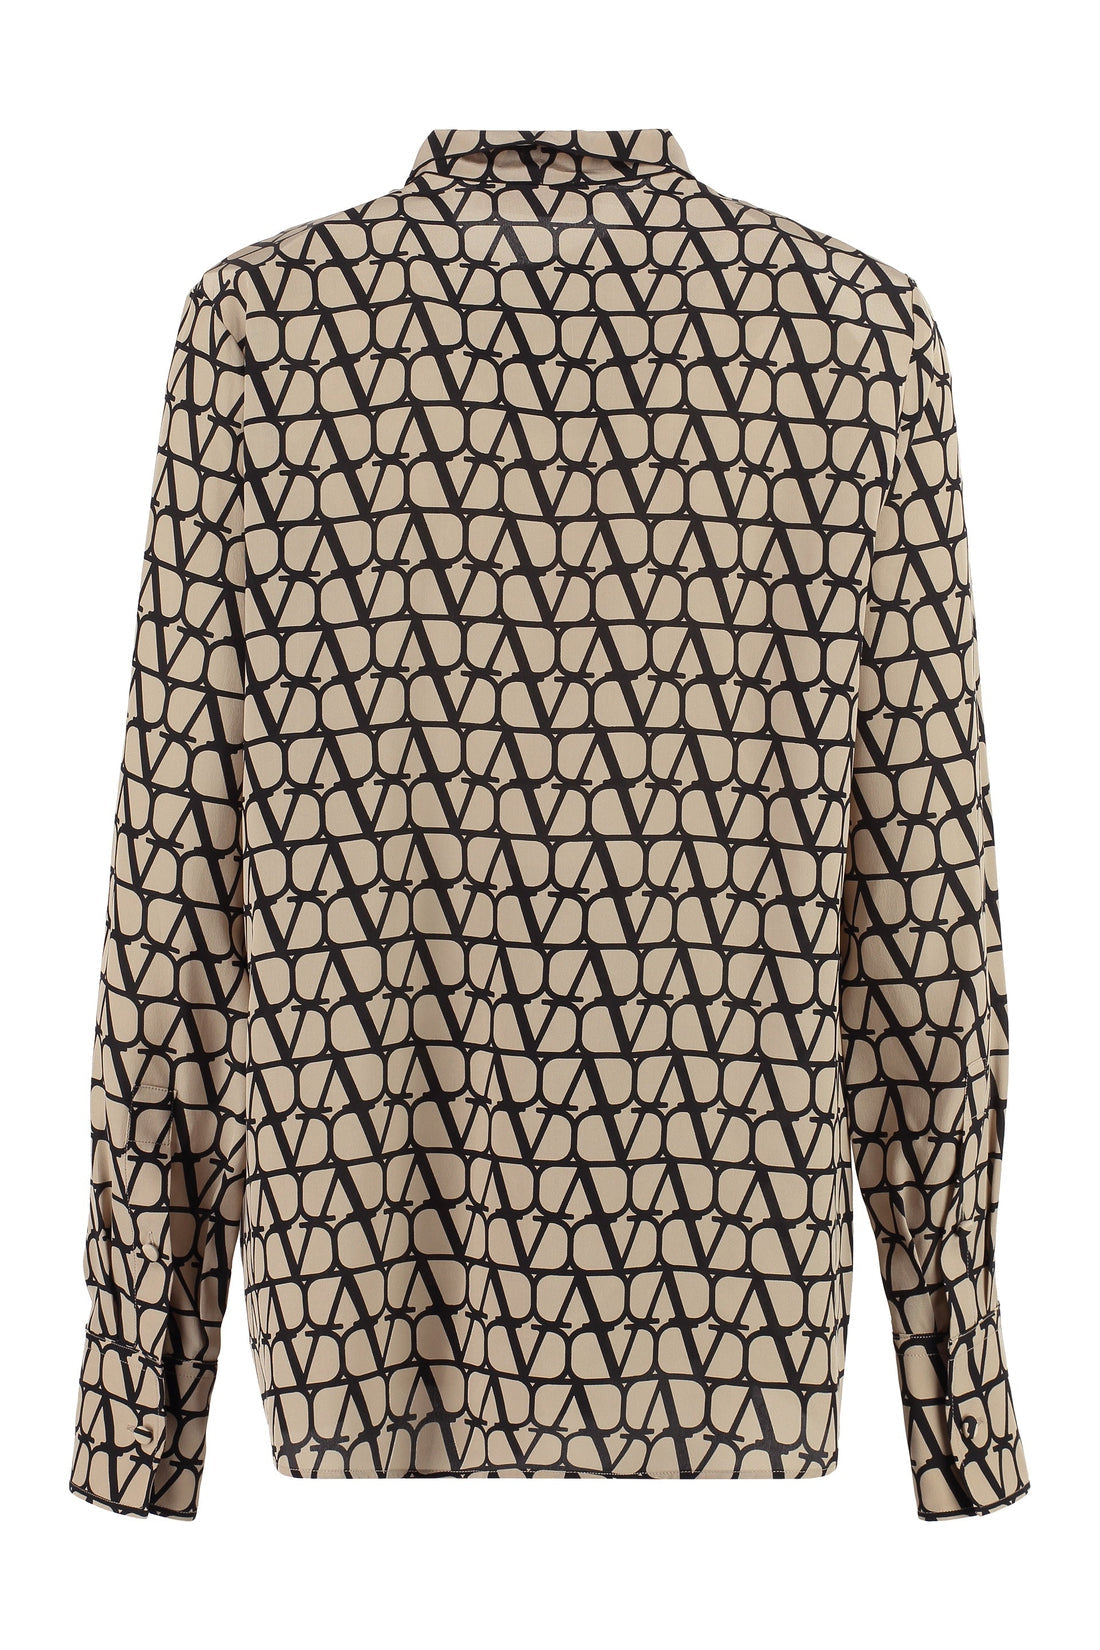 Valentino-OUTLET-SALE-Printed silk shirt-ARCHIVIST